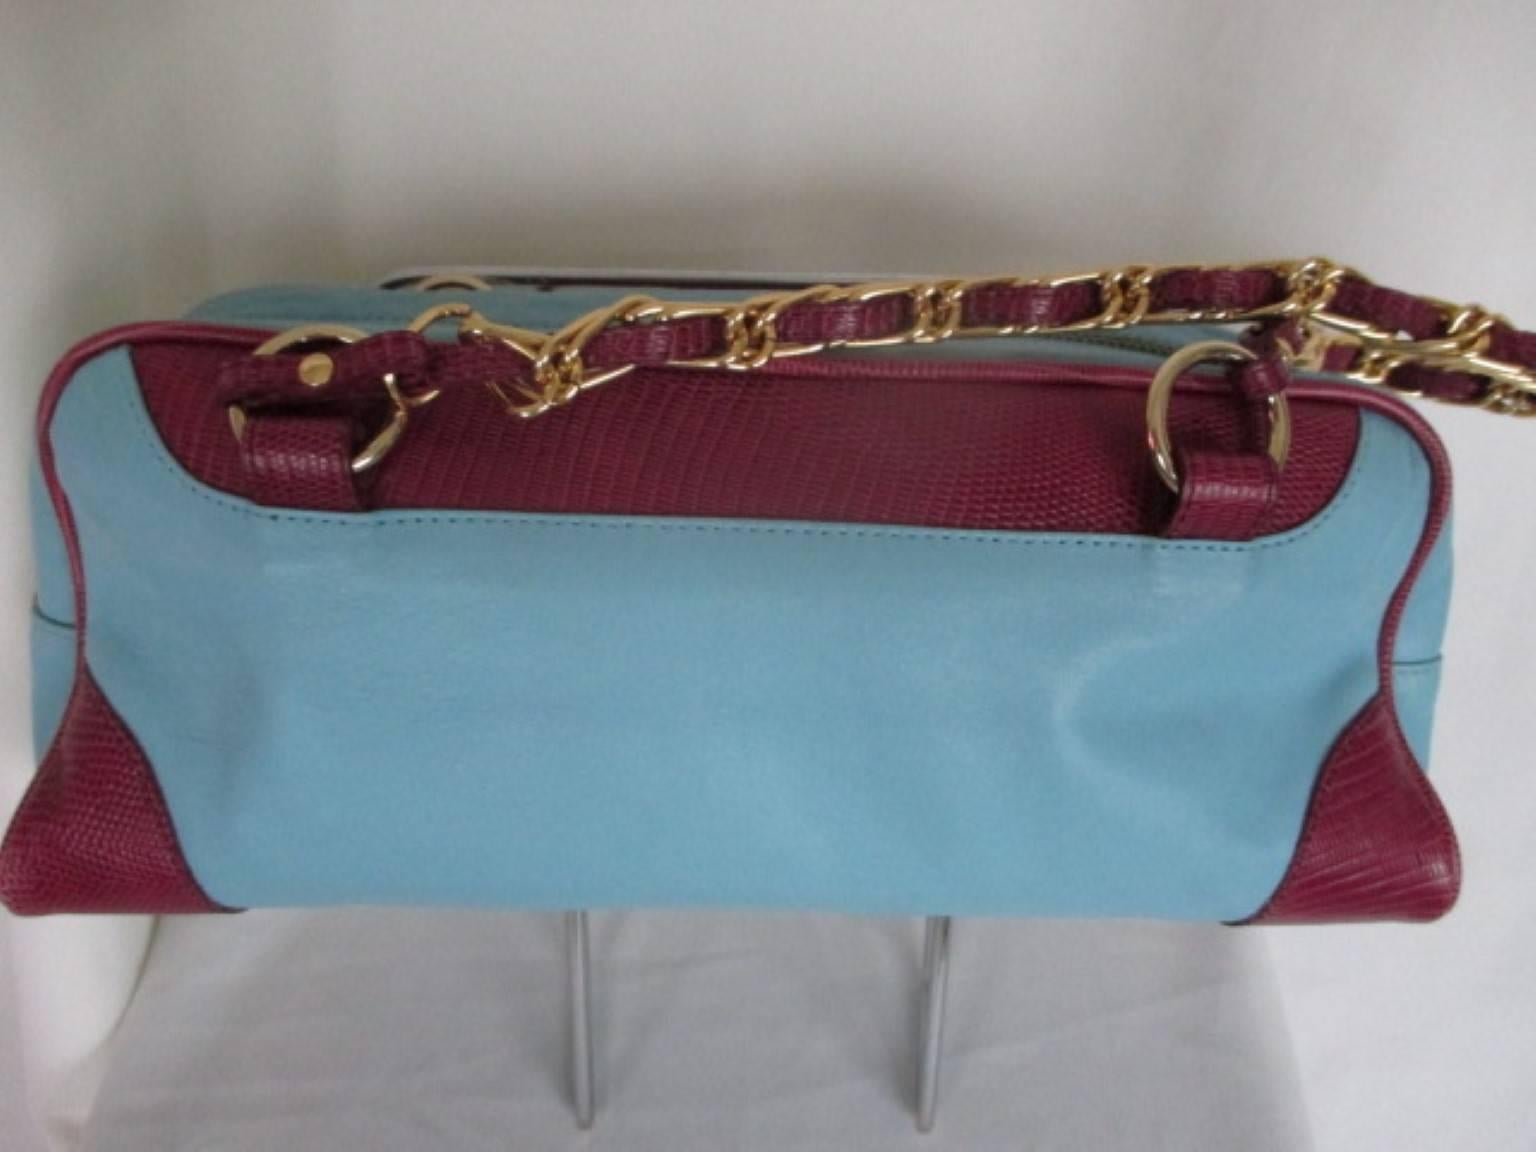 This handbag is made of soft calfs leather 